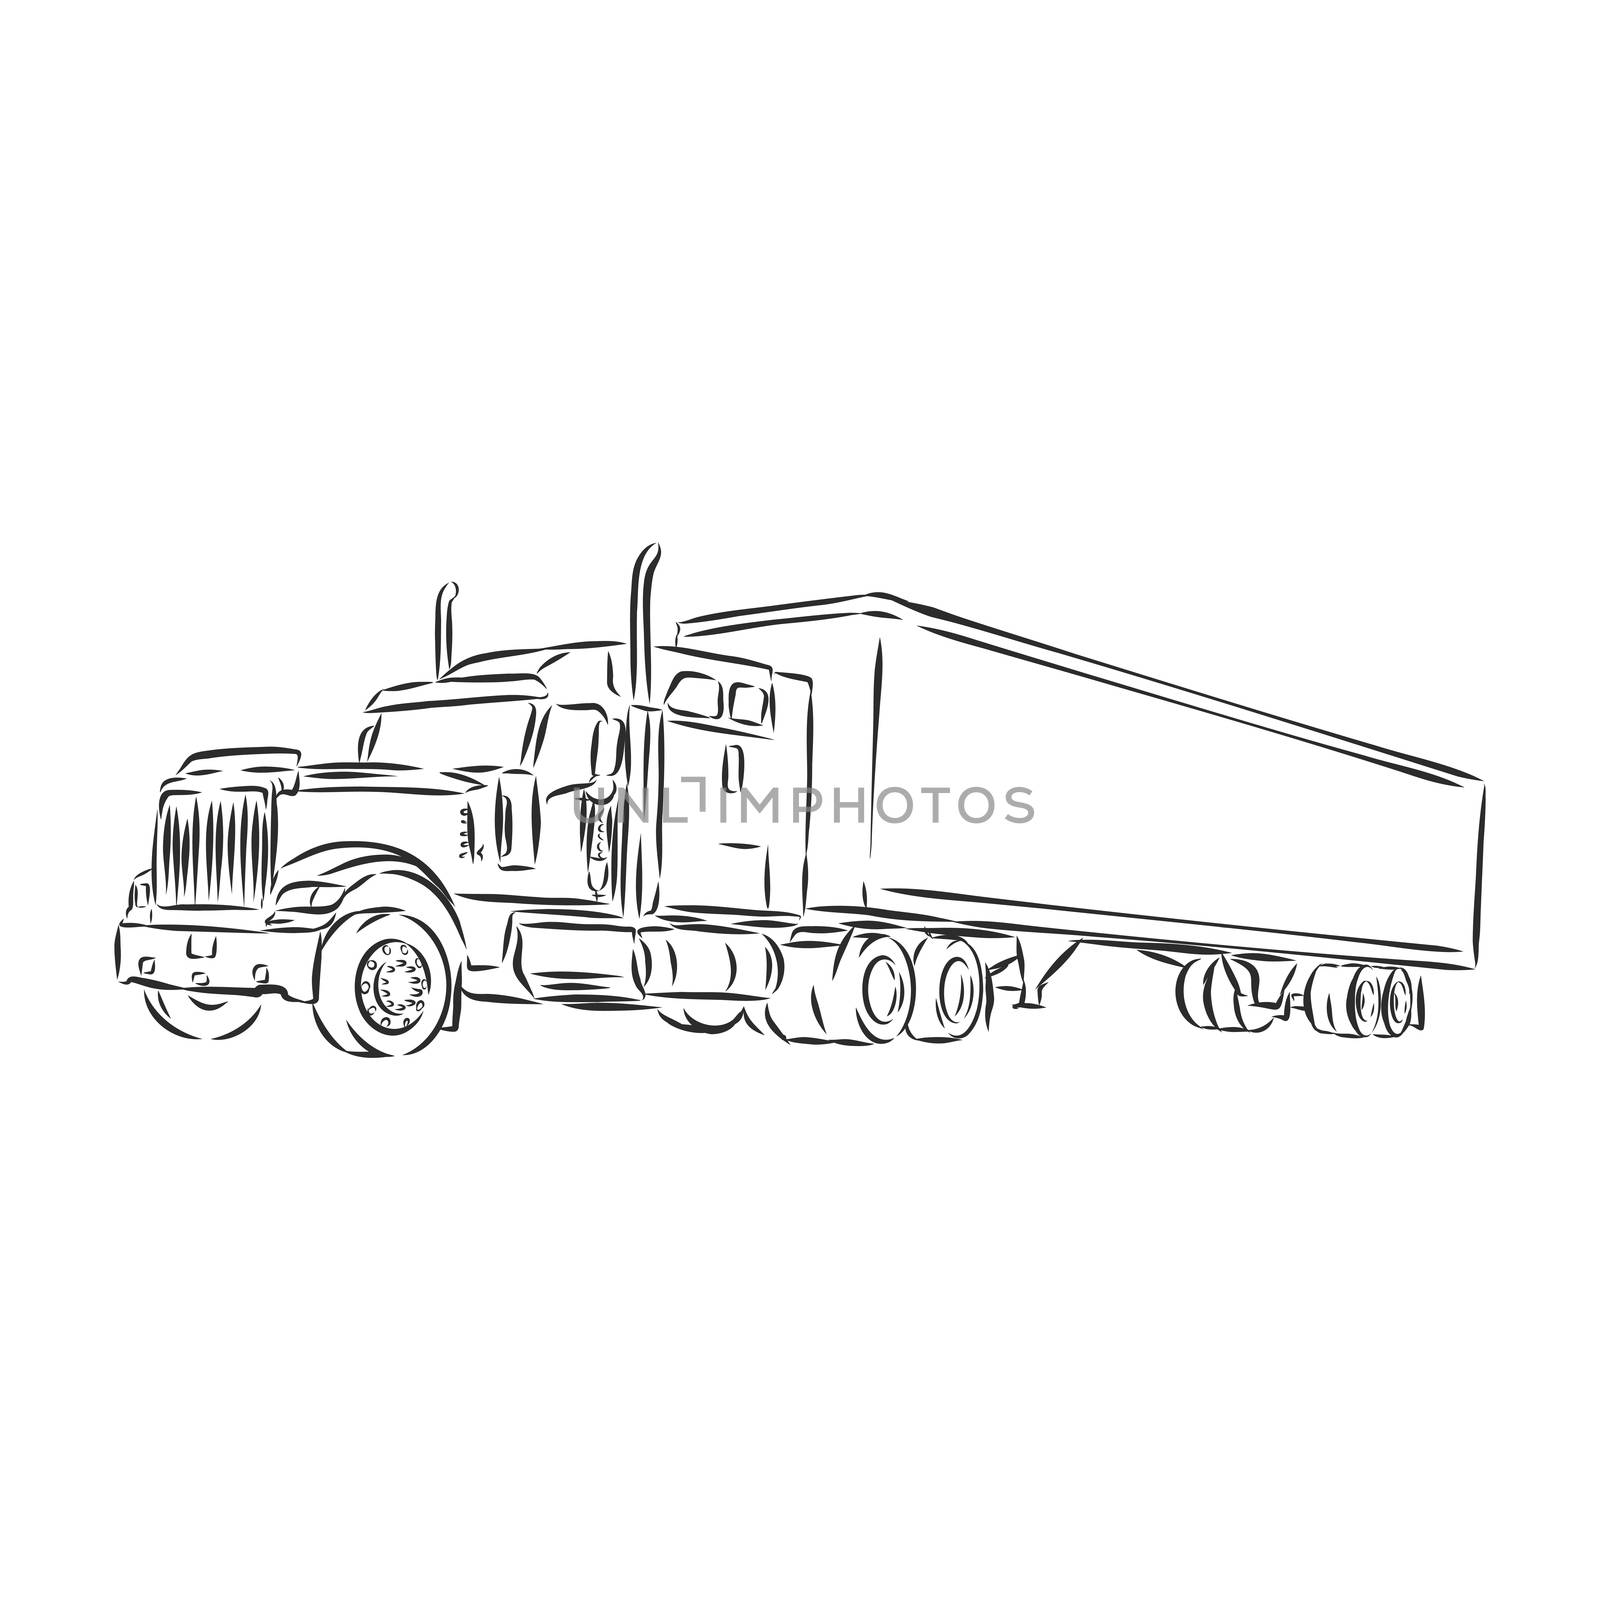 truck symbol, sketch in simple lines